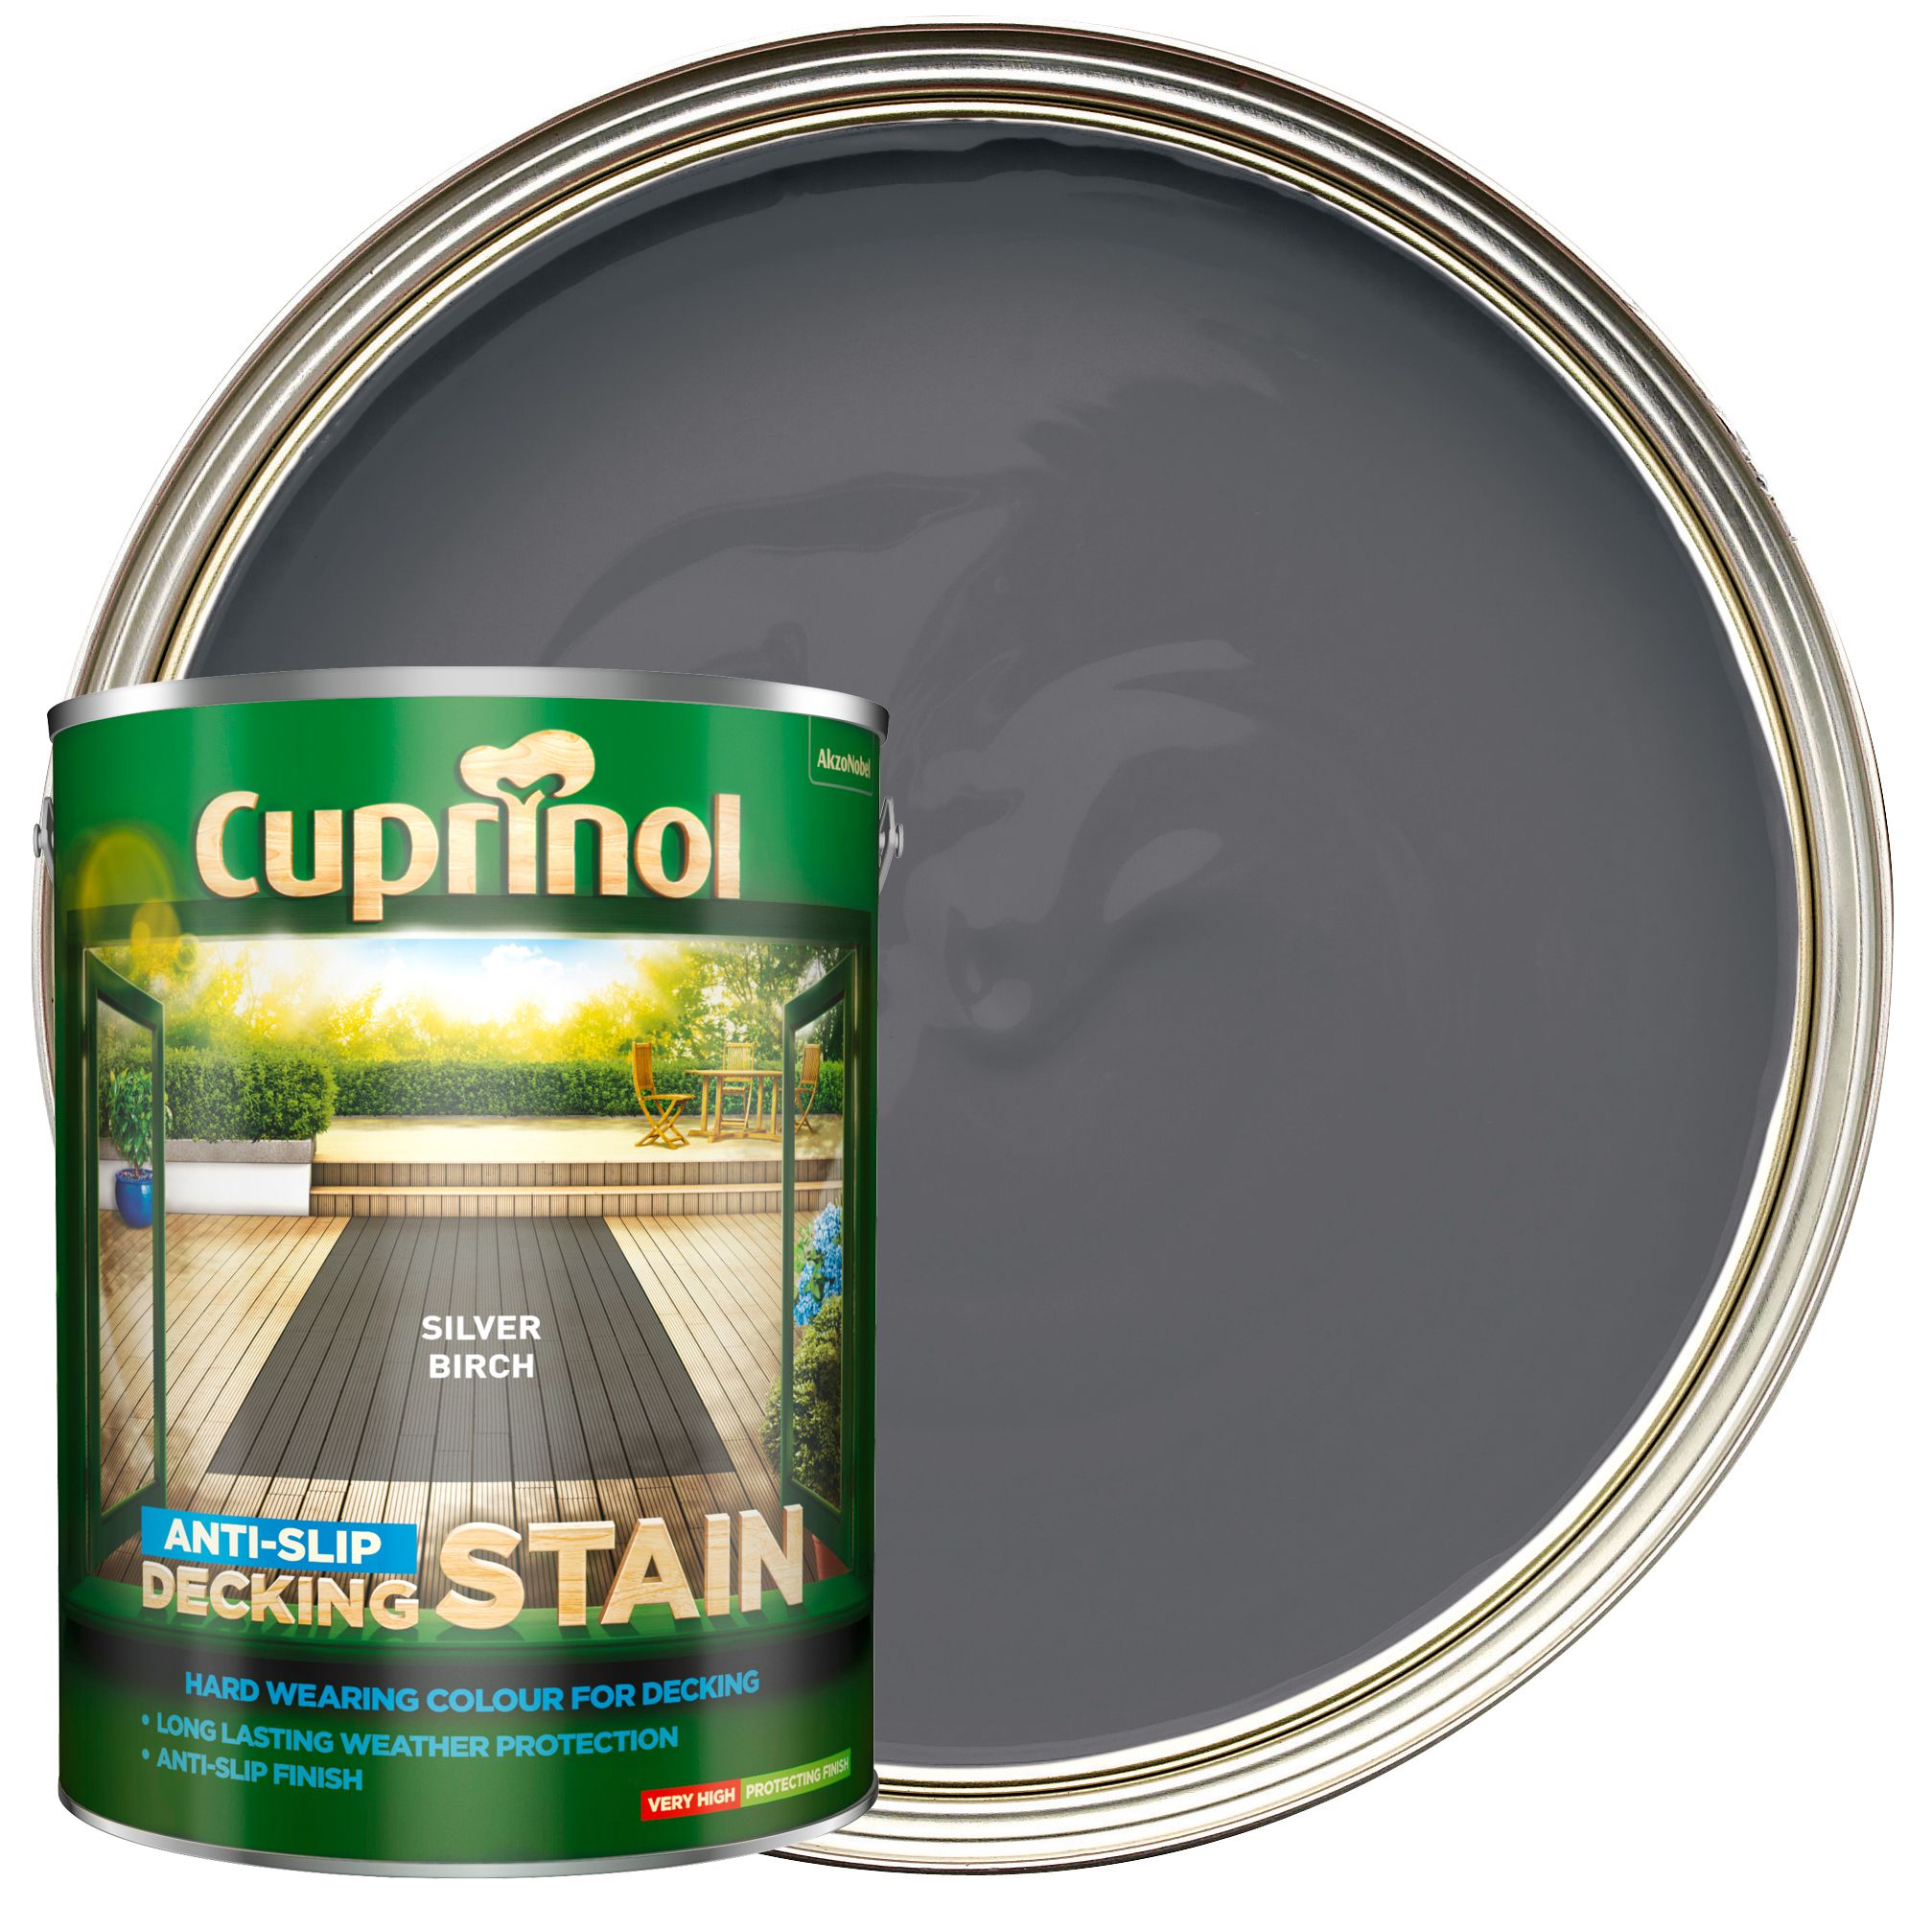 Image of Cuprinol ANTI-SLIP Decking Stain Silver Birch 5L